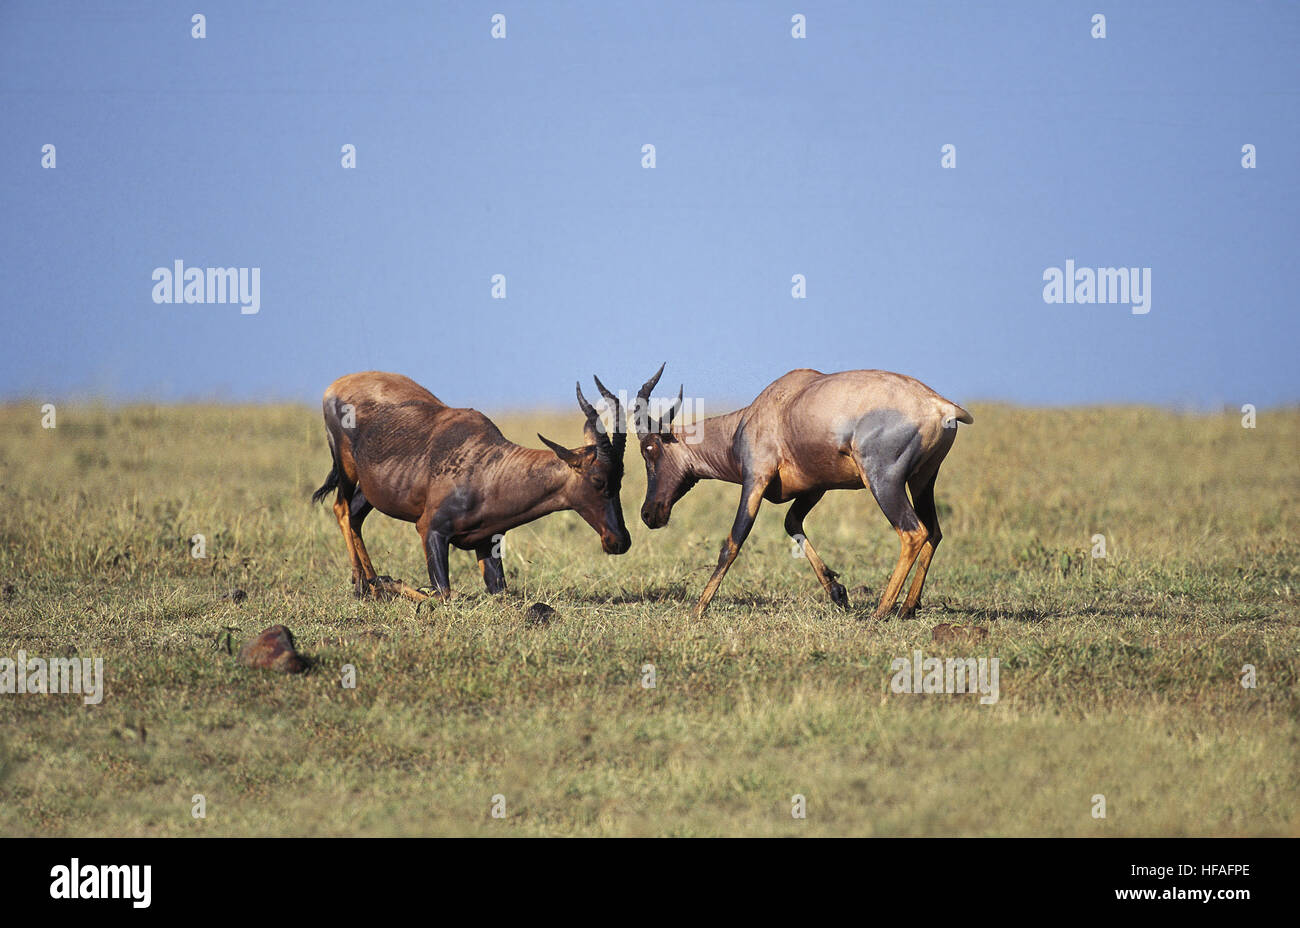 Topi, damaliscus korrigum, hombres luchando, Parque de Masai Mara en Kenya Foto de stock